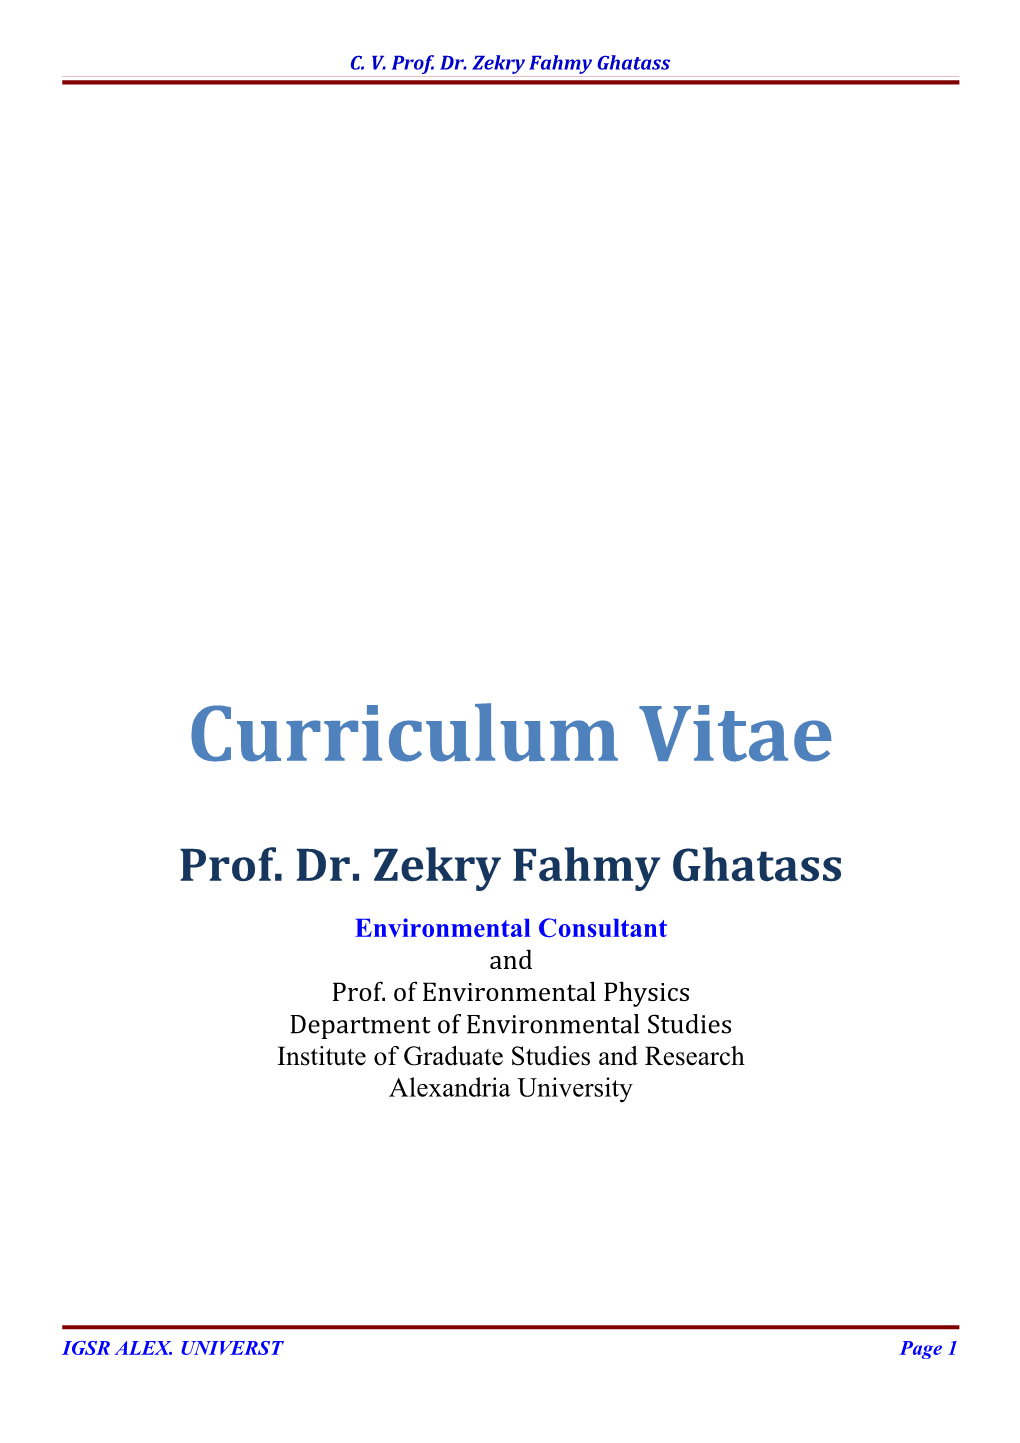 C. V. Prof. Zekry Fahmy Ghatass